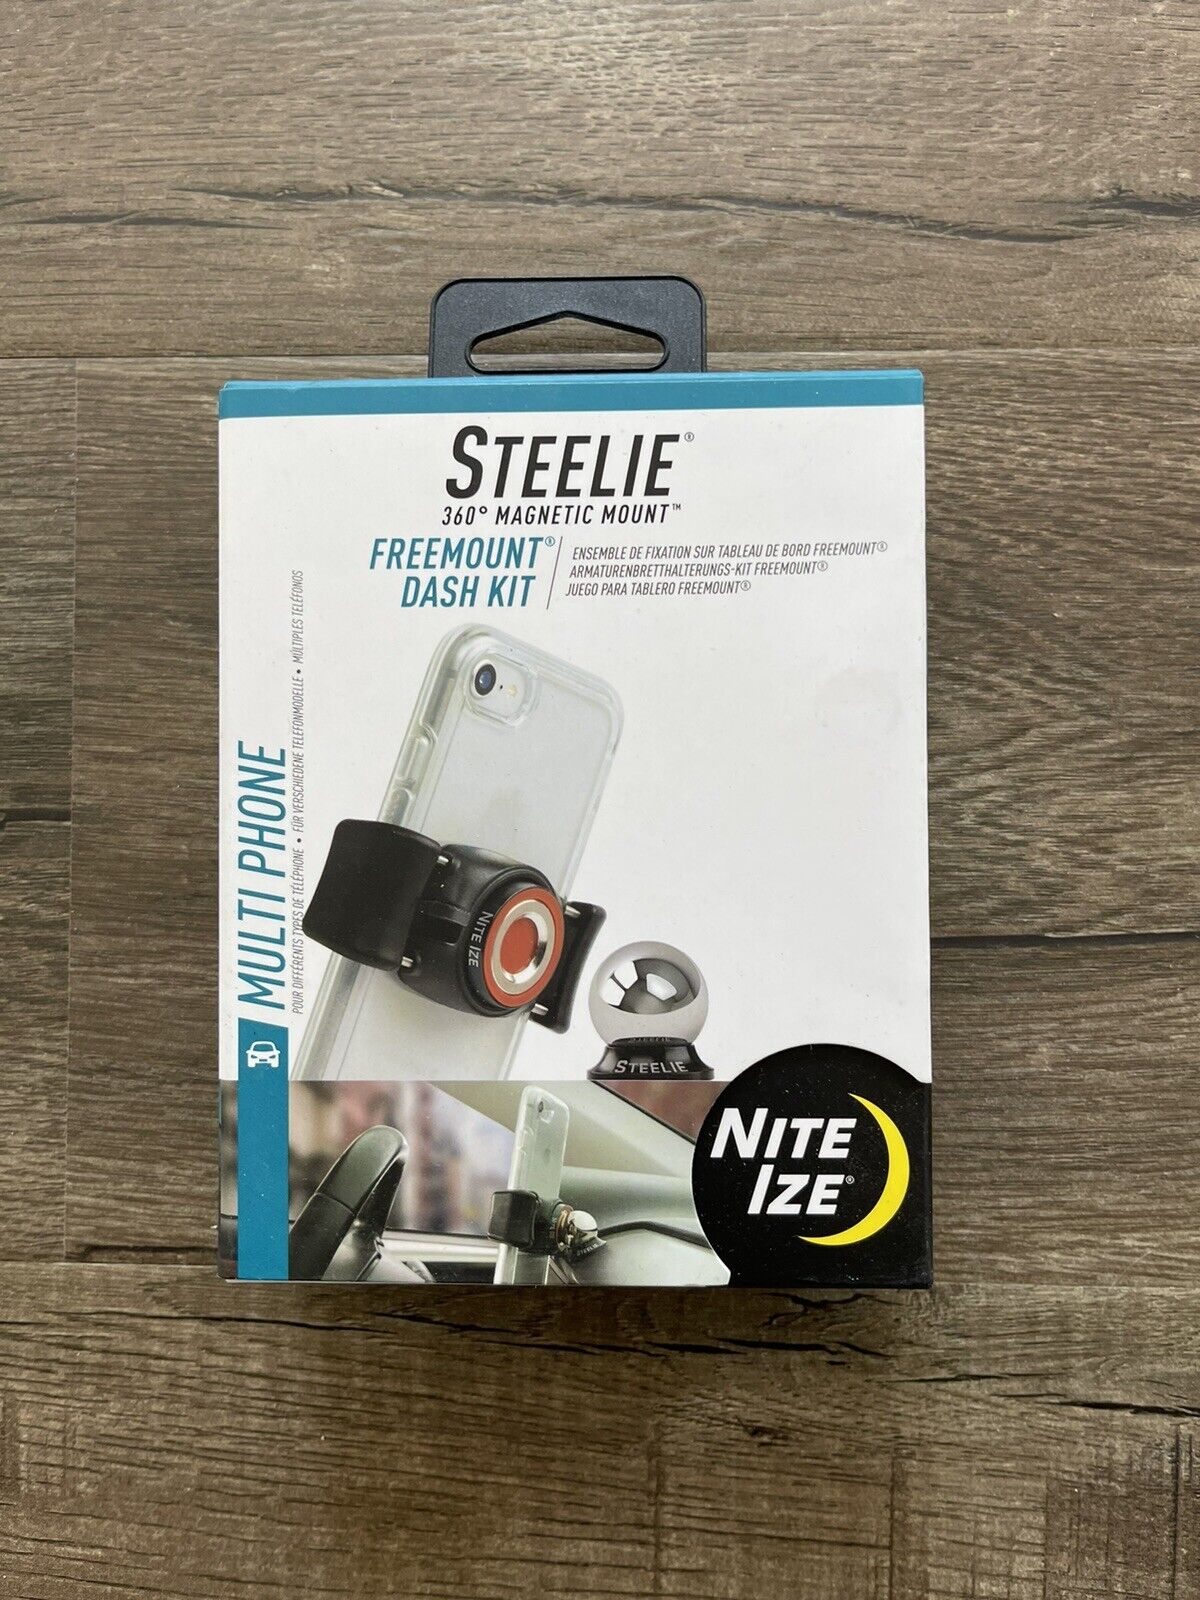 Nite Ize Steelie 360 Magnetic Mount Freemount Dash Kit - Brand New (STFD-01-R8)